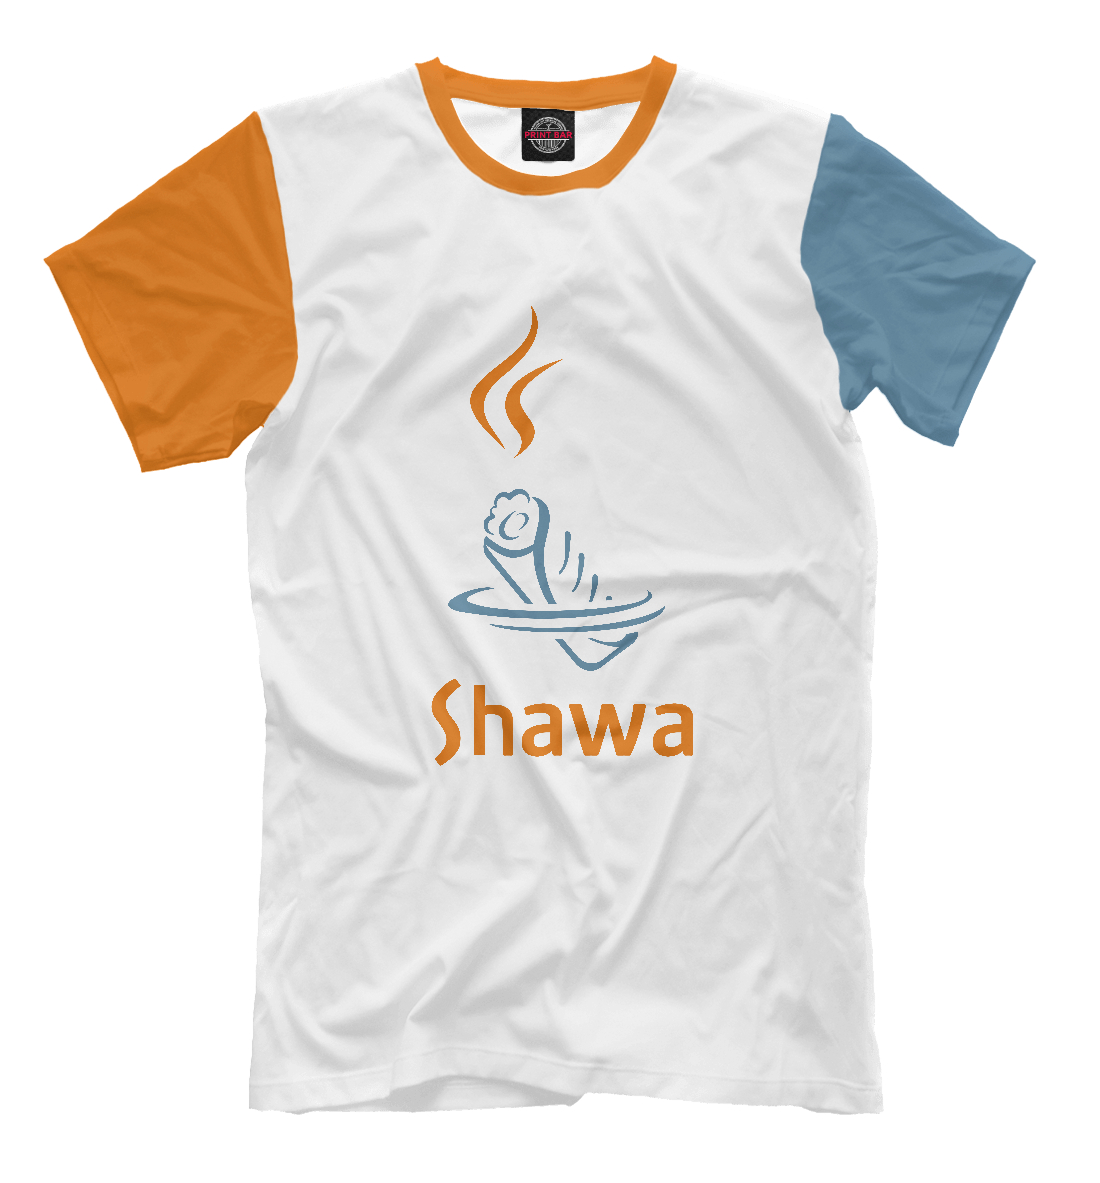 Shawa initial